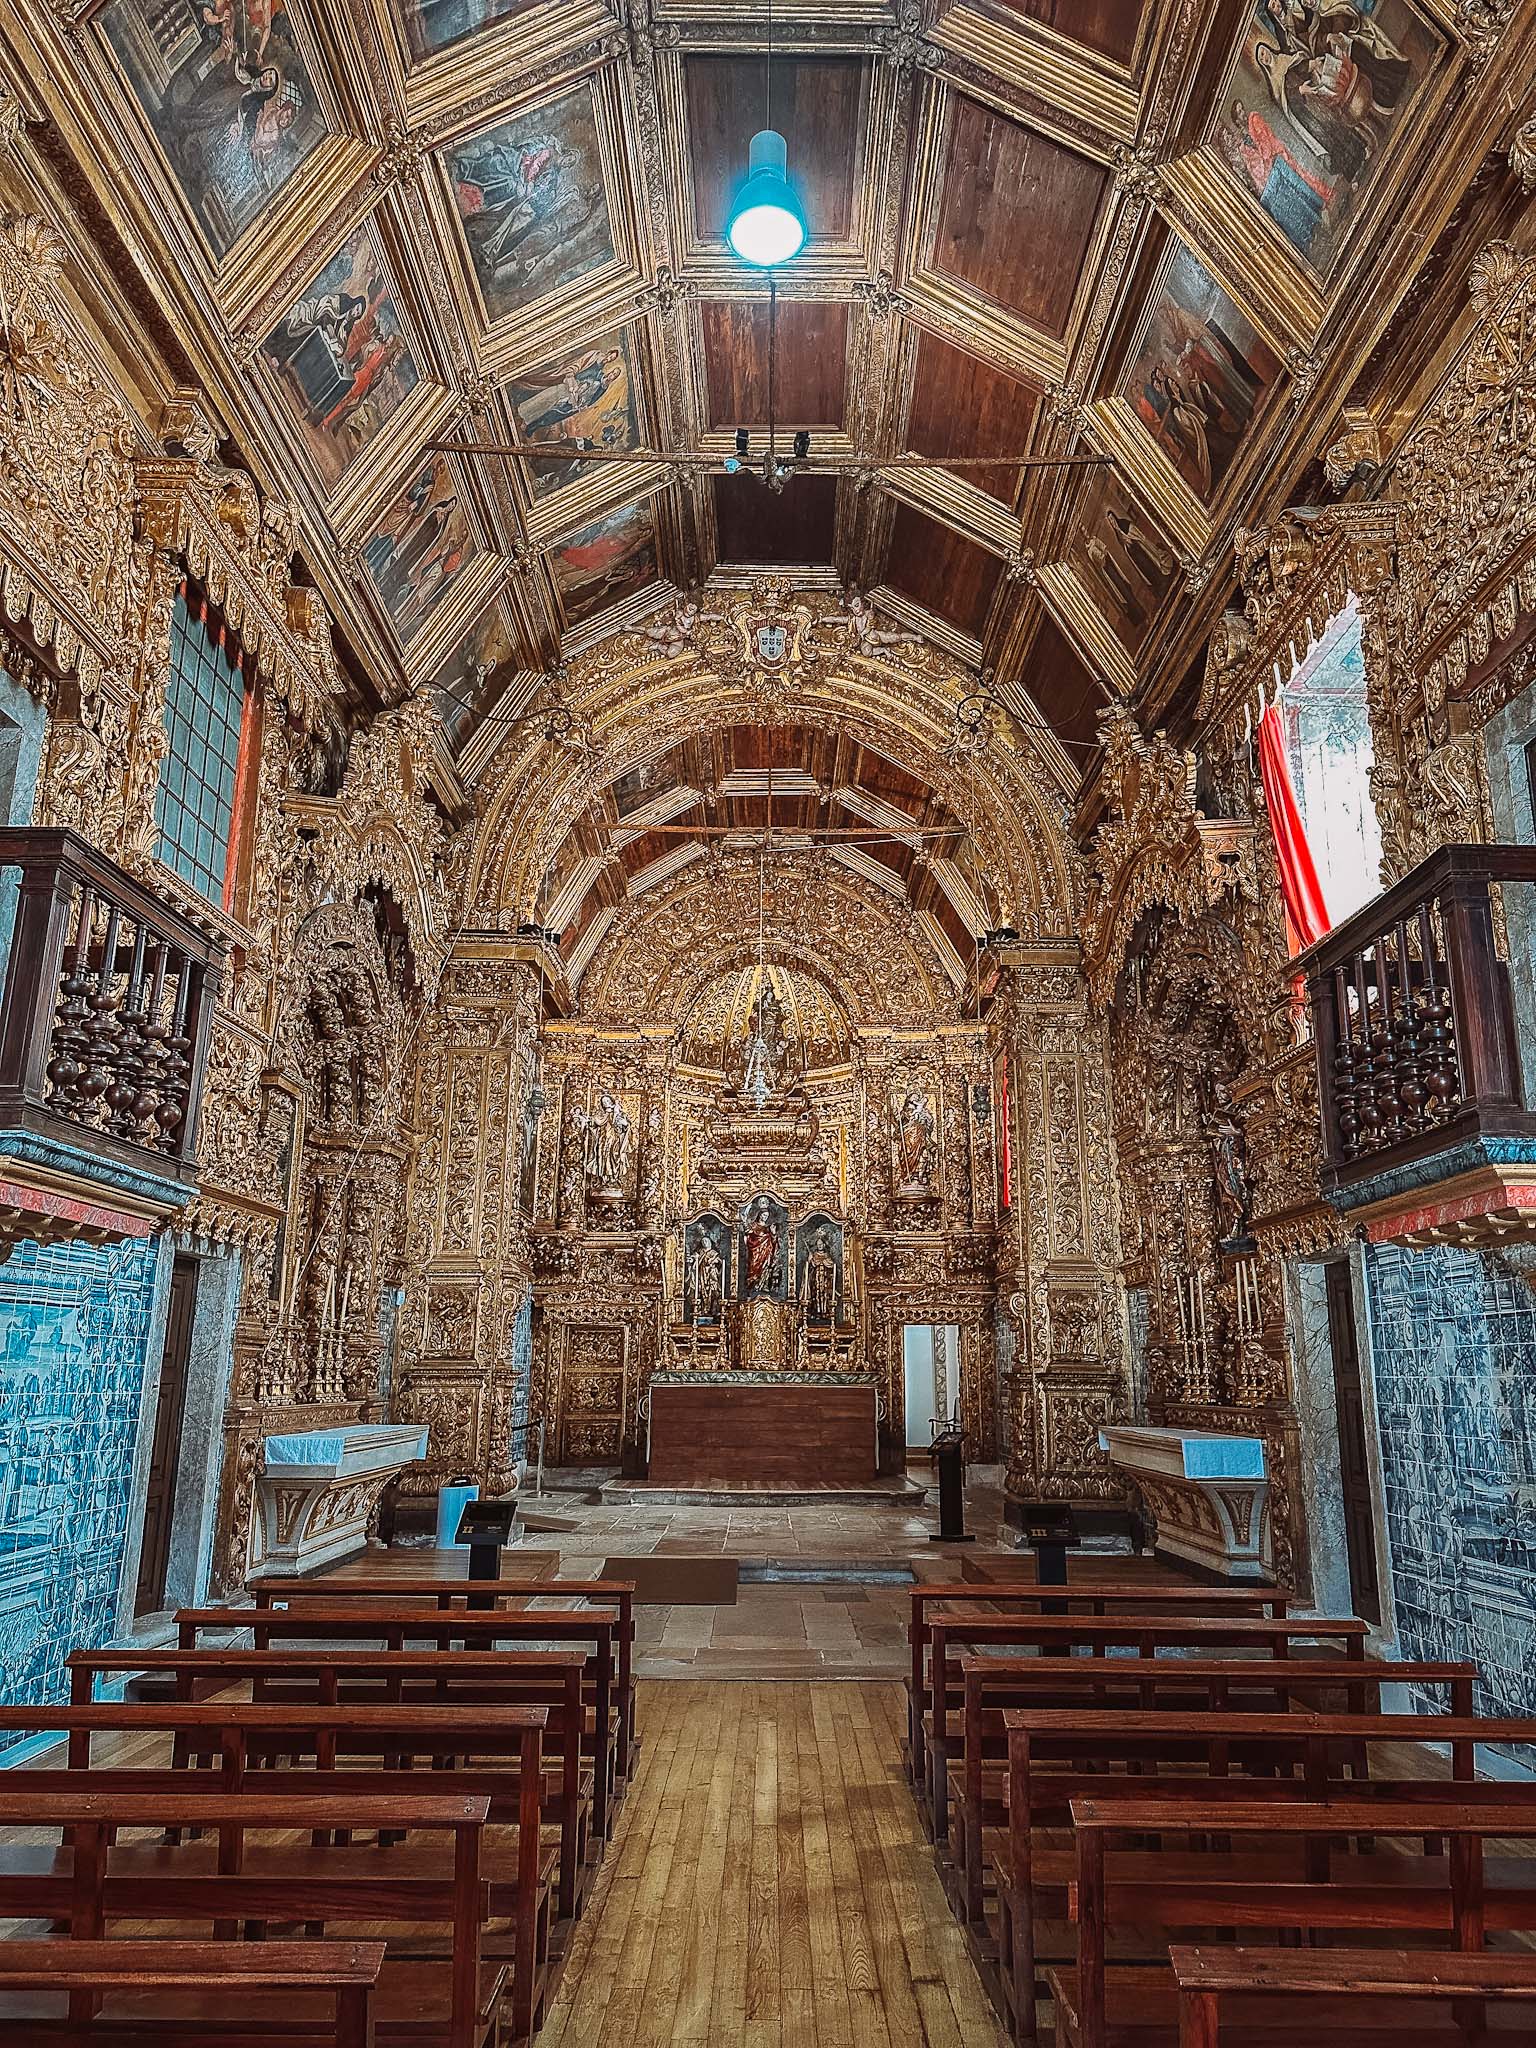 Best things to do in Aveiro, Portugal - Carmelita de Aveiro church